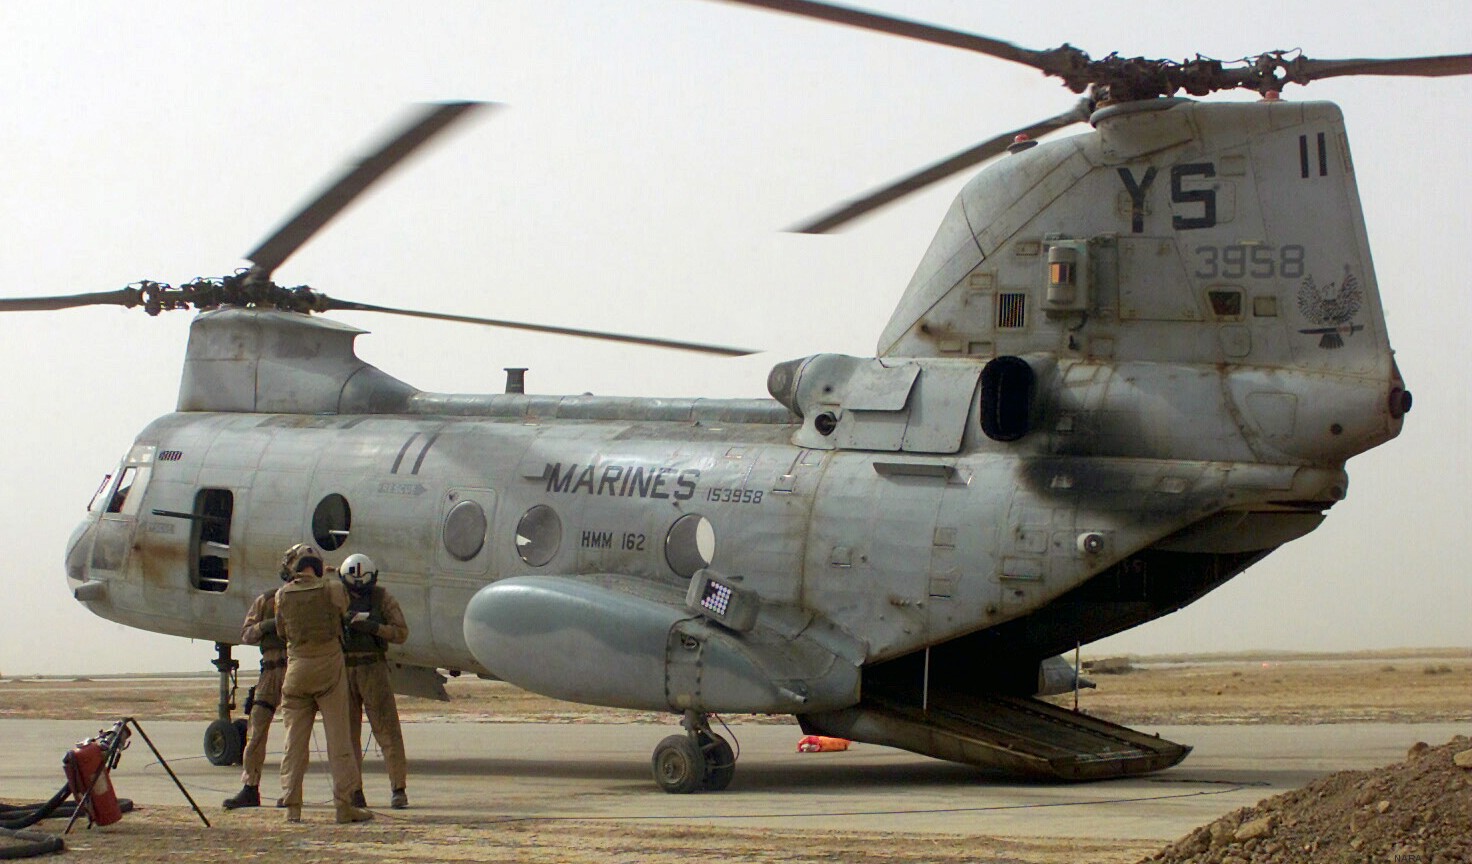 hmm-162 golden eagles marine medium helicopter squadron ch-46e sea knight usmc 15 operation iraqi freedom